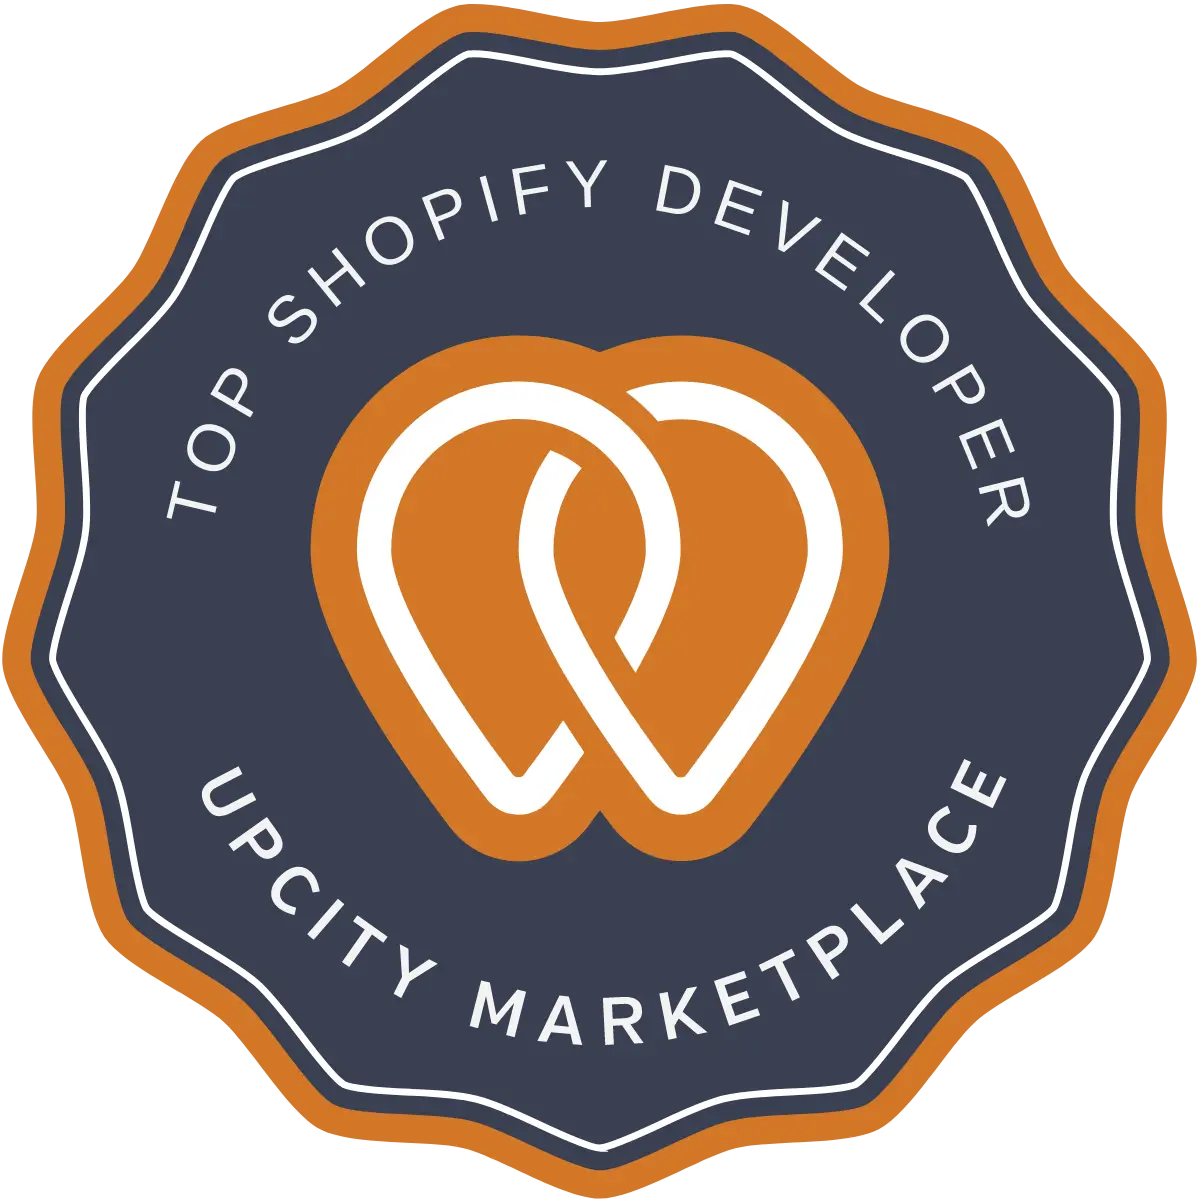 upcity shopify badge